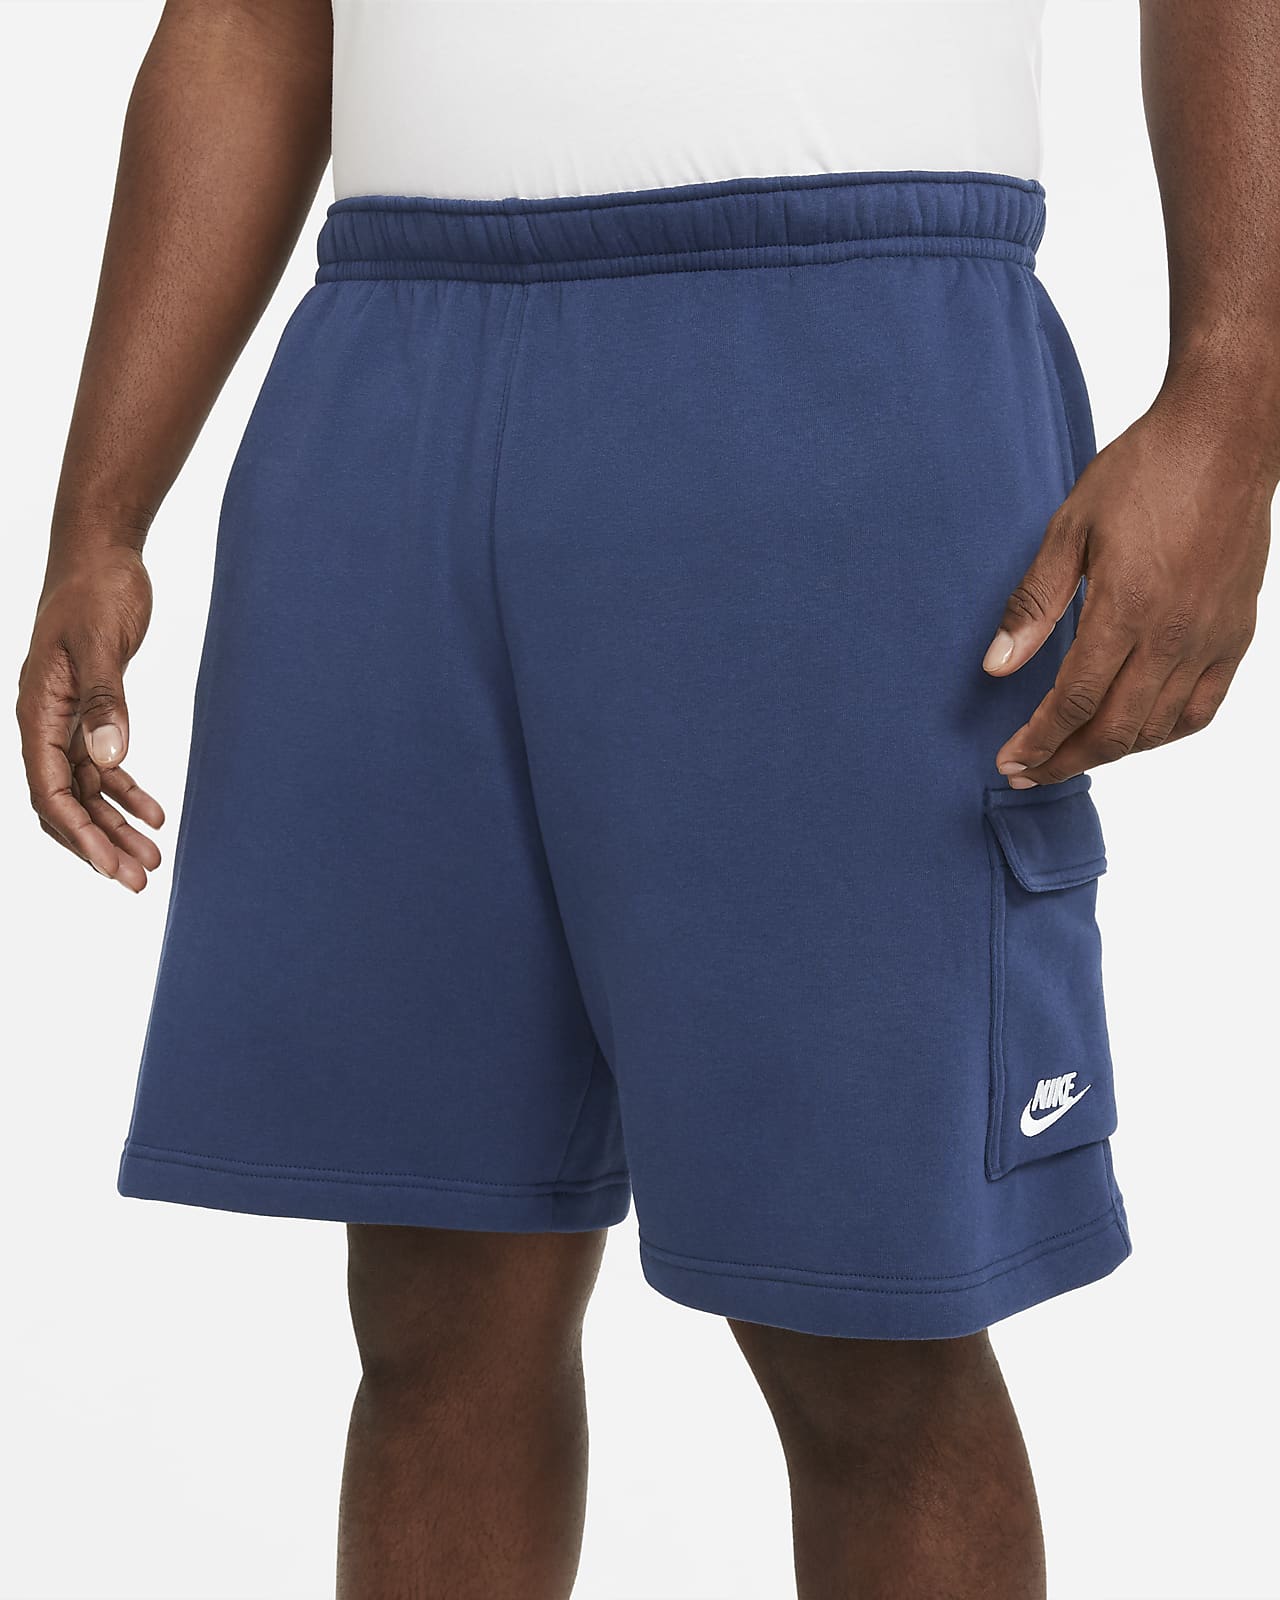 nike cargo shorts elastic waist